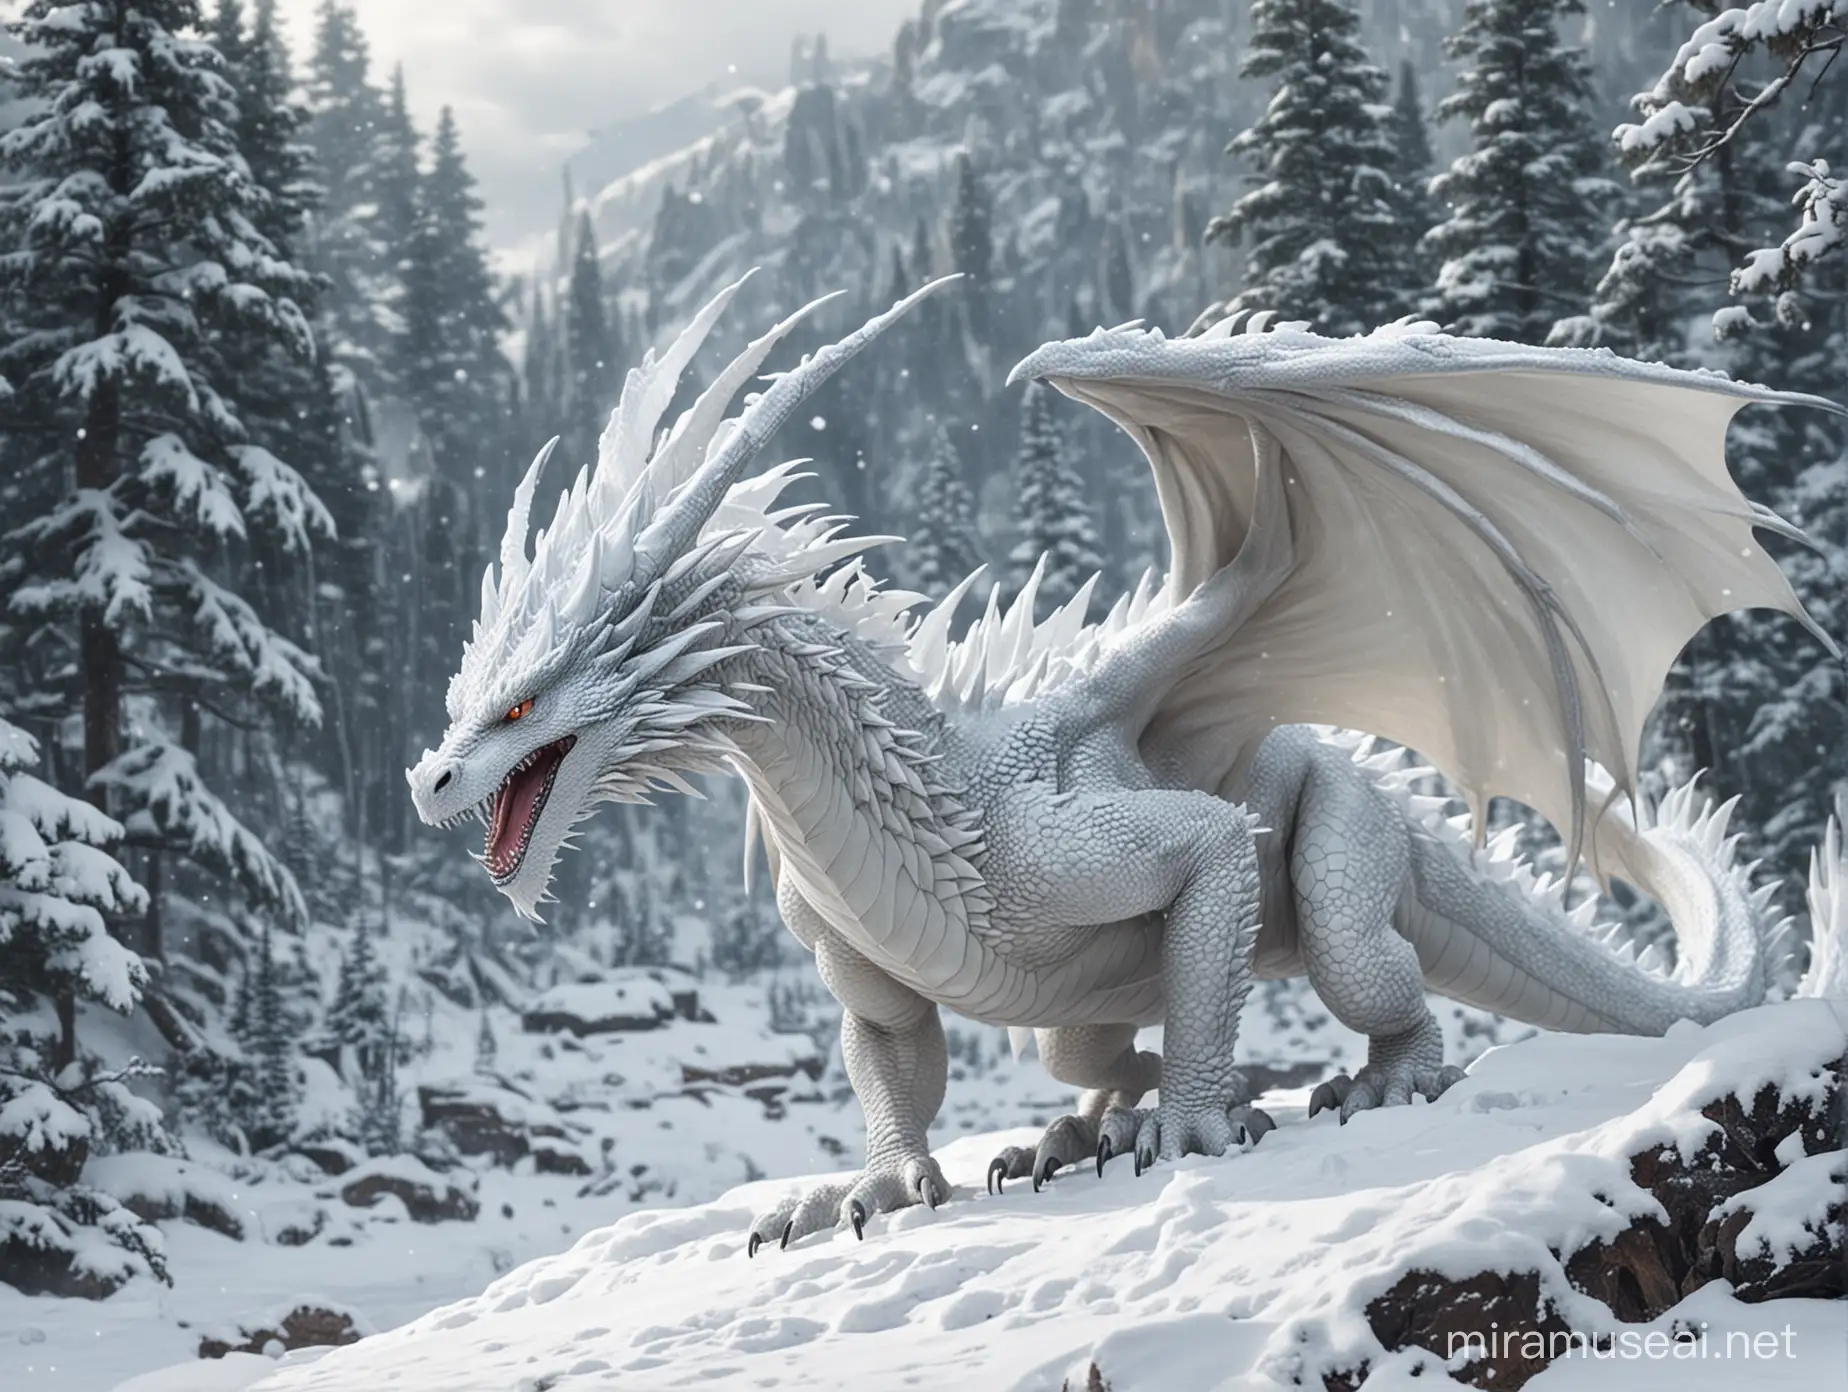 Majestic Snow Dragon Sculpture in Winter Wonderland